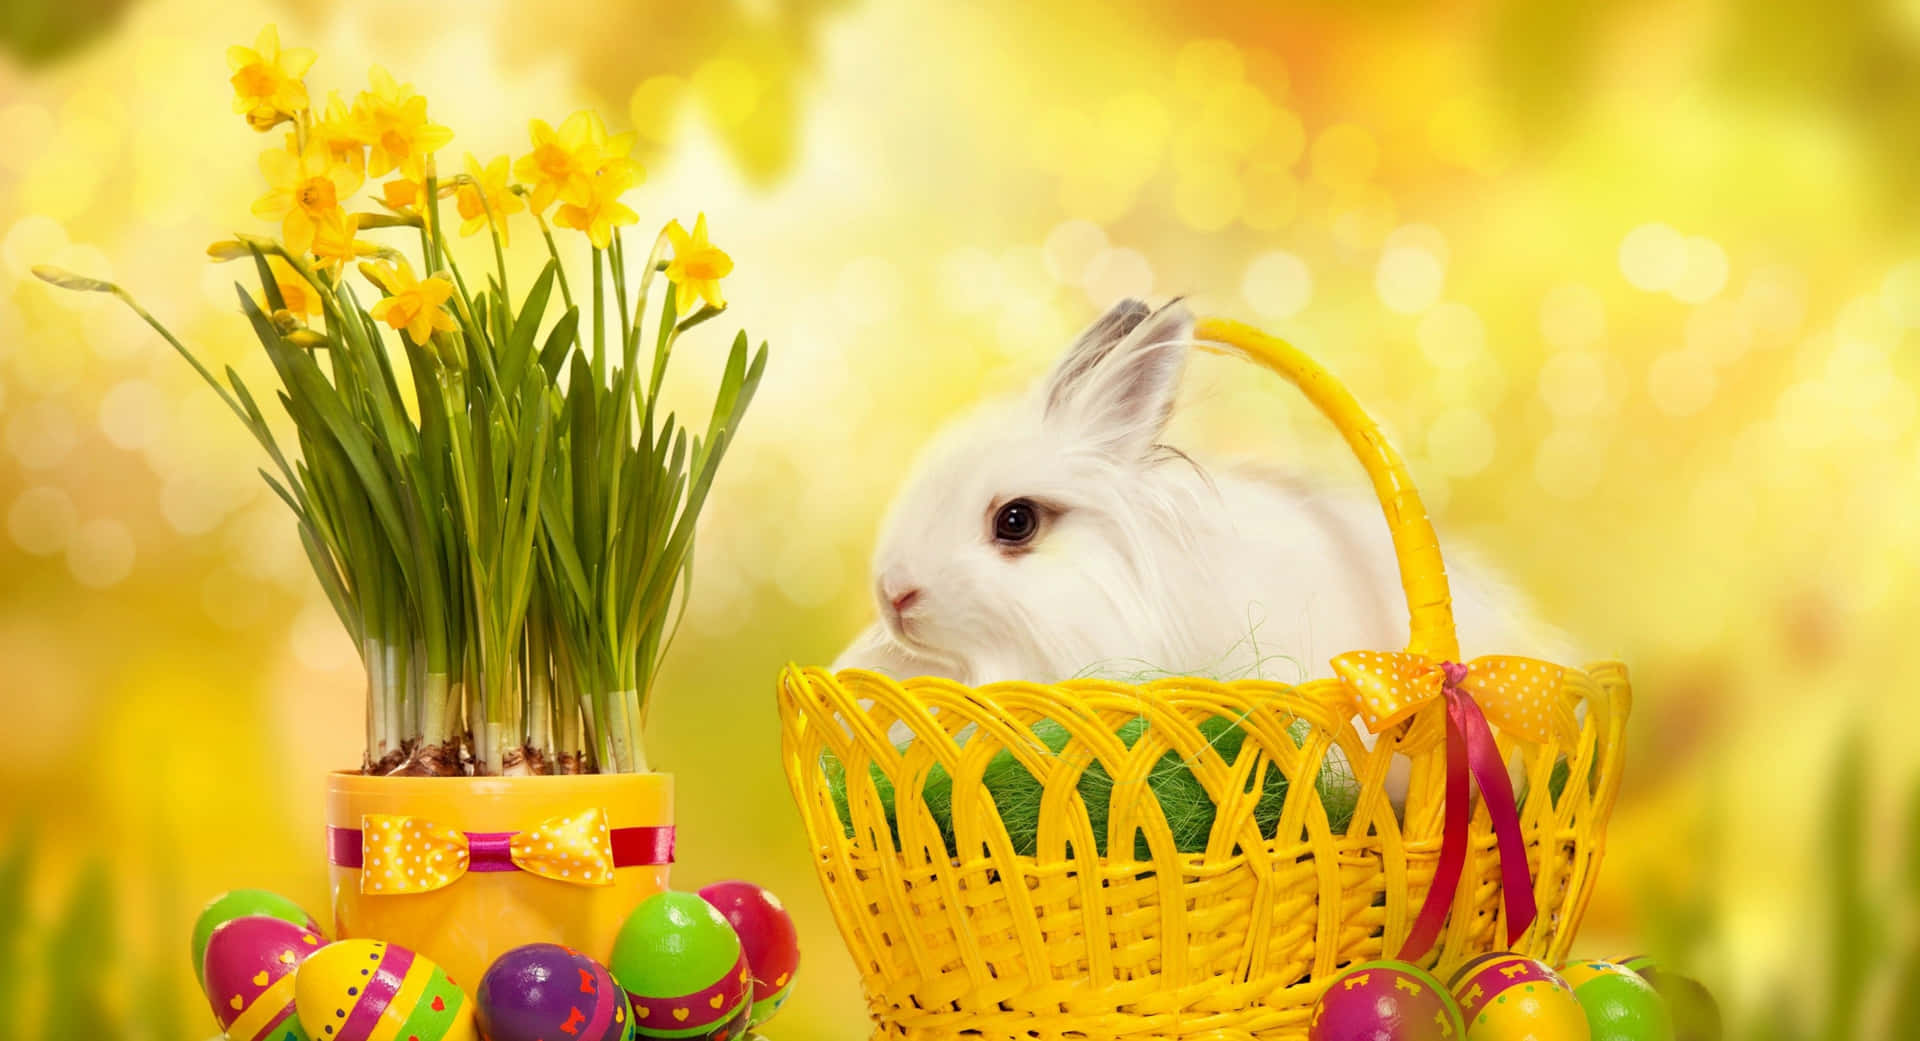 "Colorful Easter Bunny Celebrating Holiday Spirit."